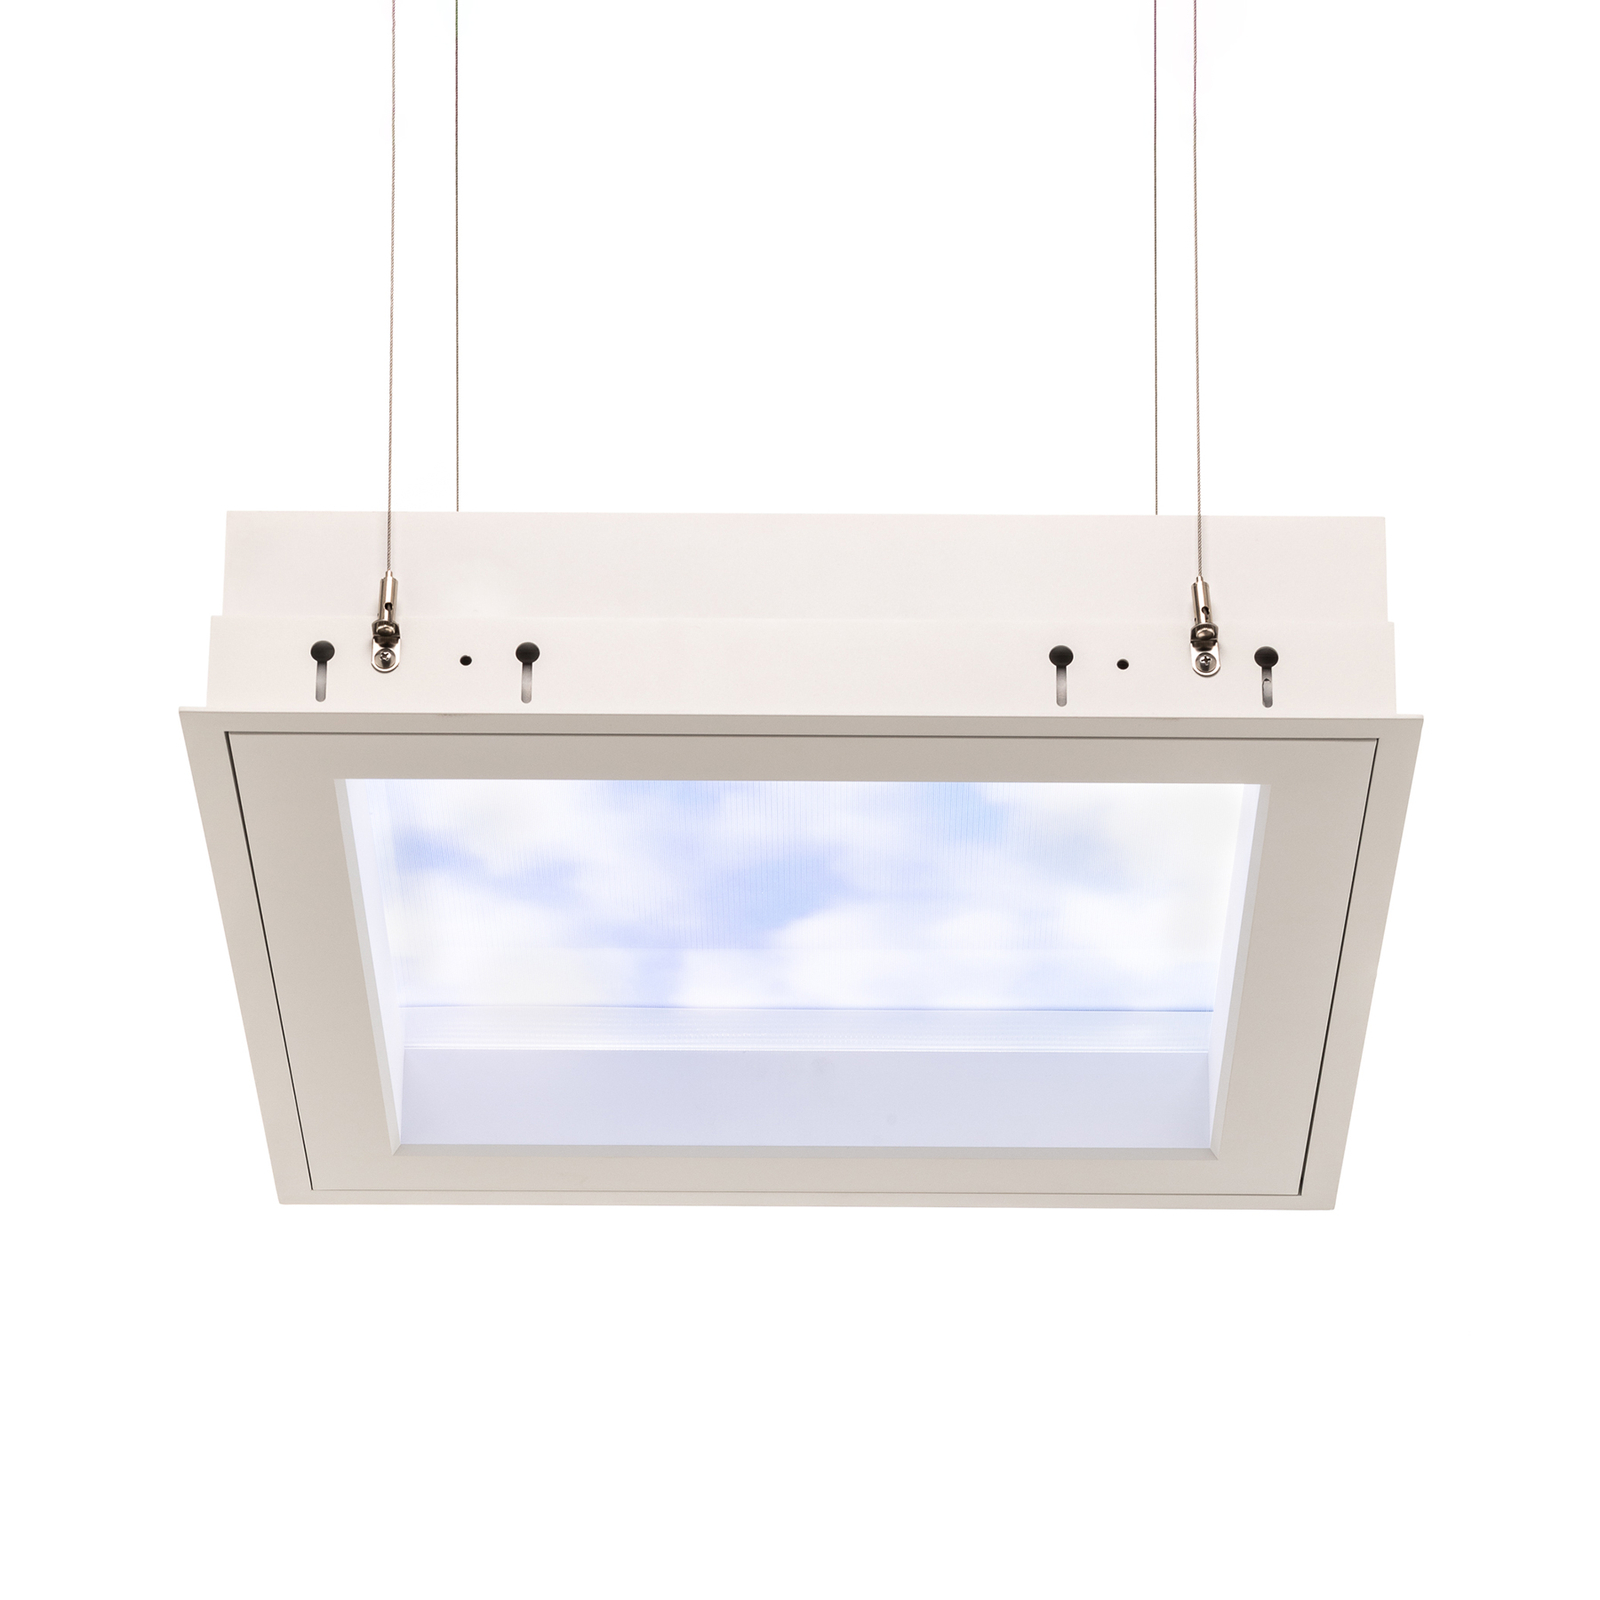 LED-panel Sky Window 60x60cm, monteringsram